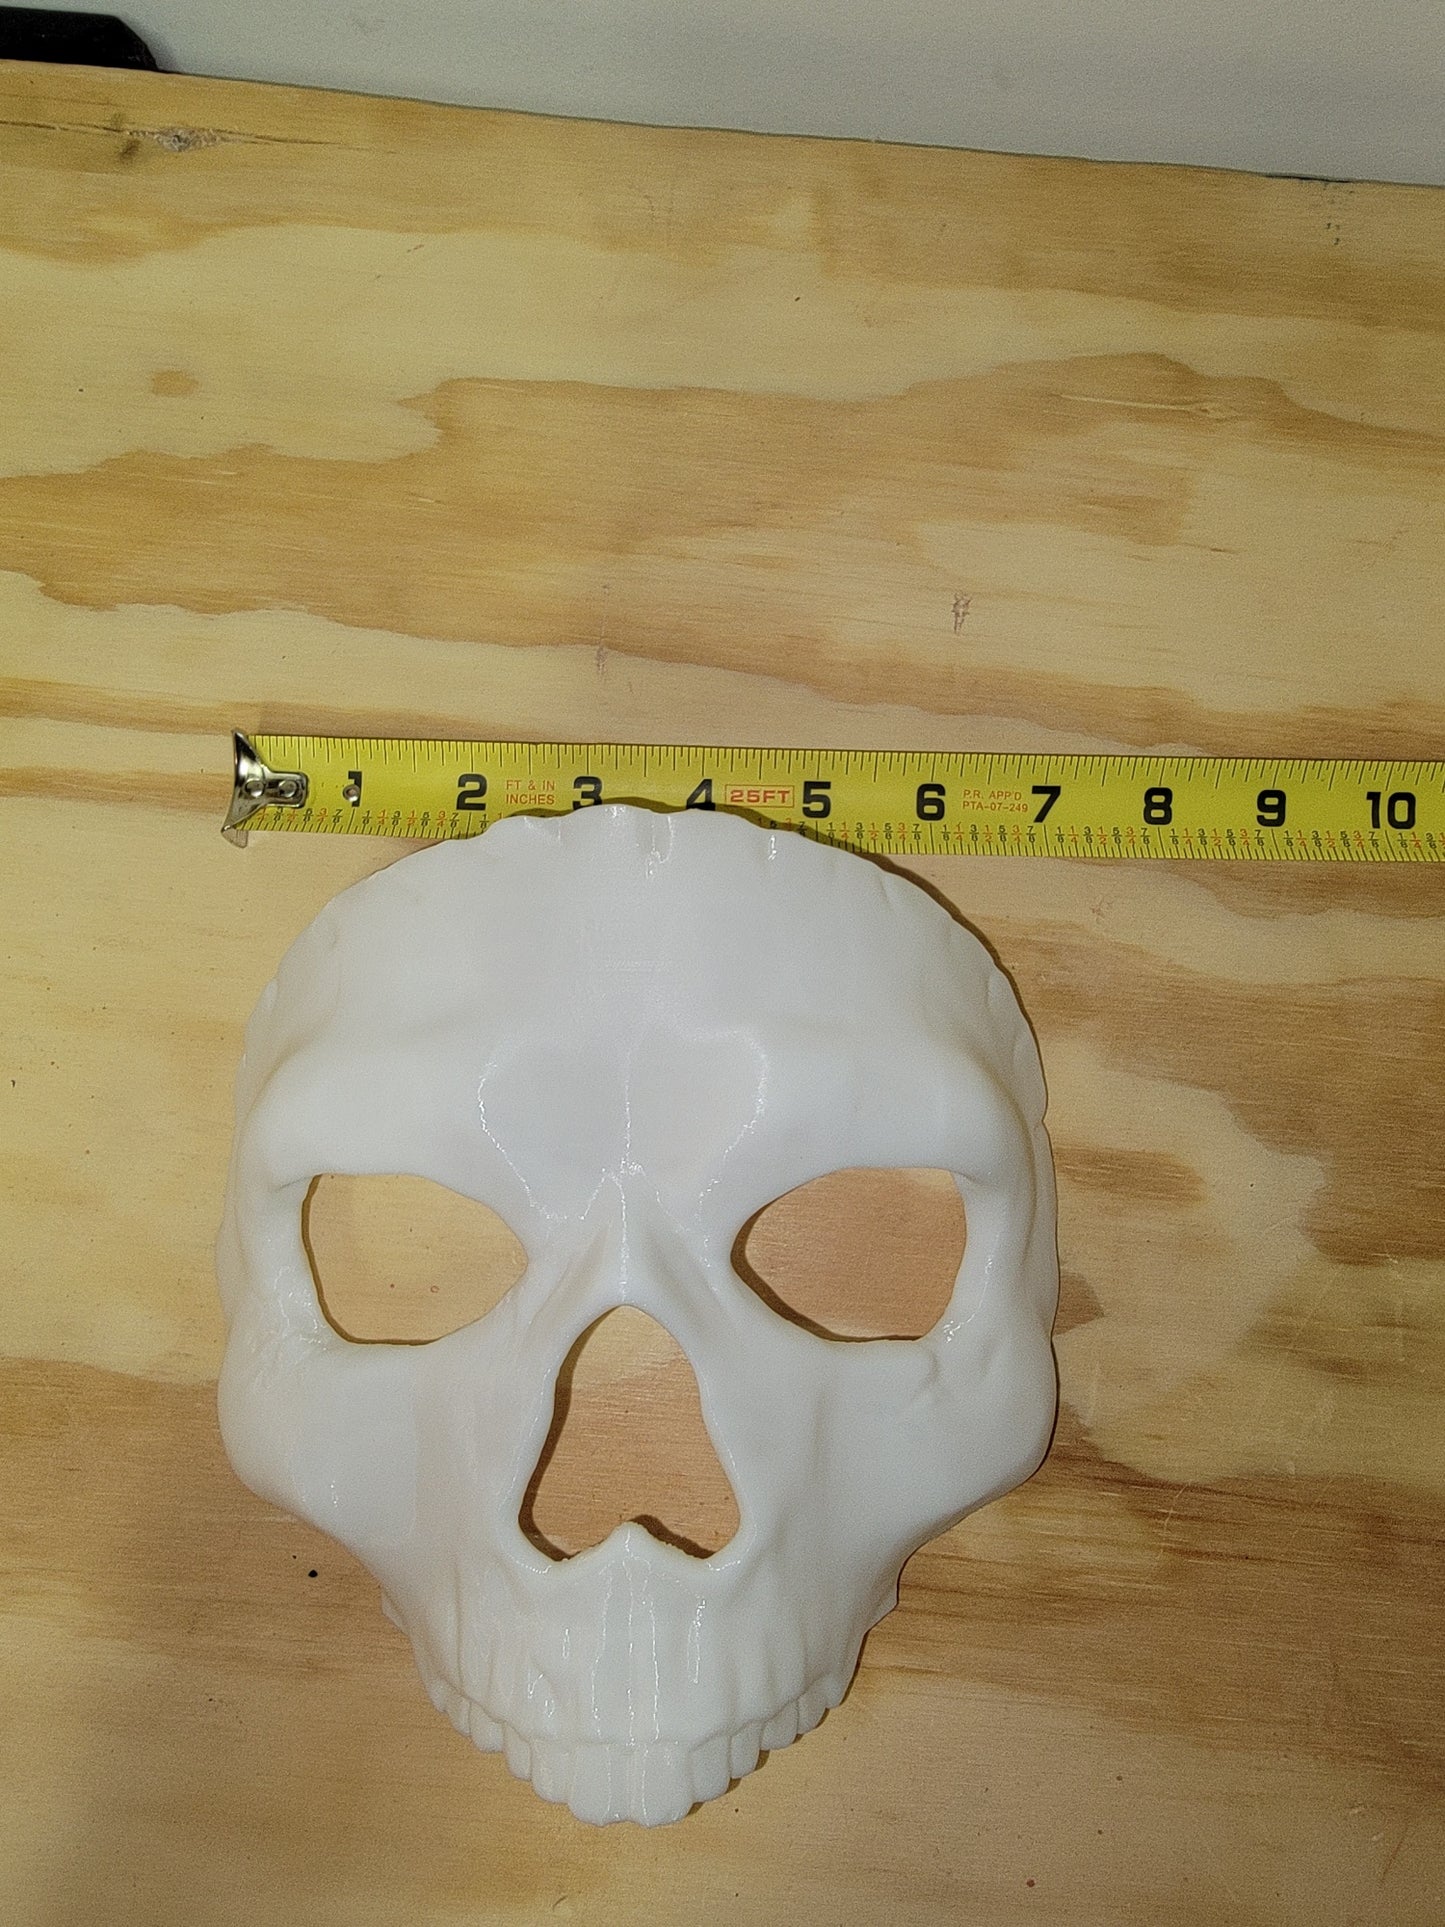 CoD "Ghost" skull mask